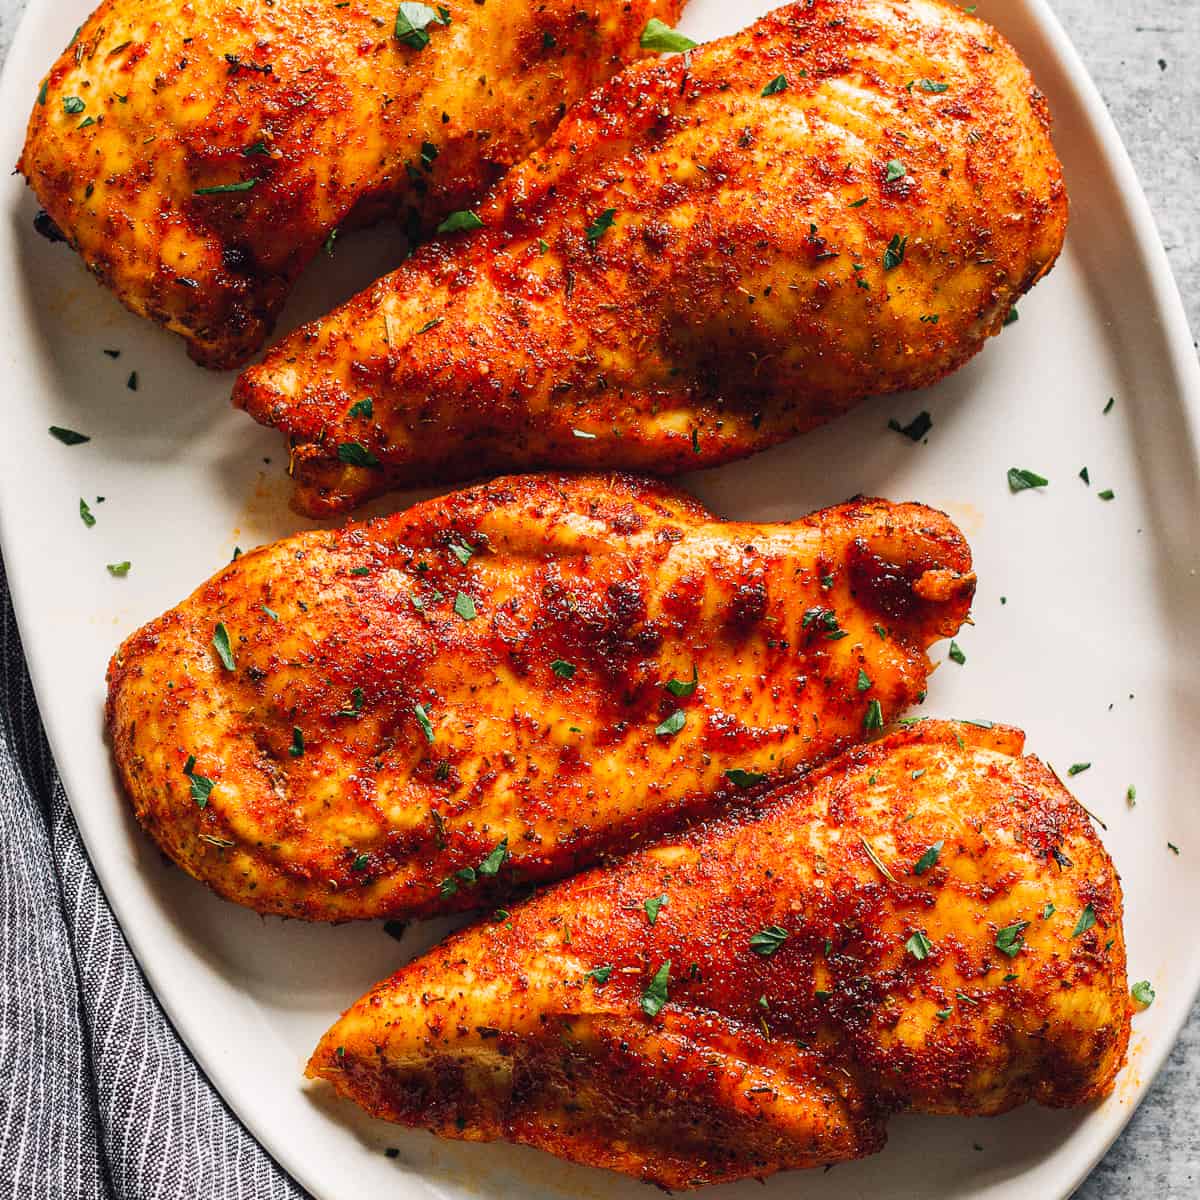 https://www.thecookierookie.com/wp-content/uploads/2021/05/featured-baked-chicken-breast-recipe.jpg